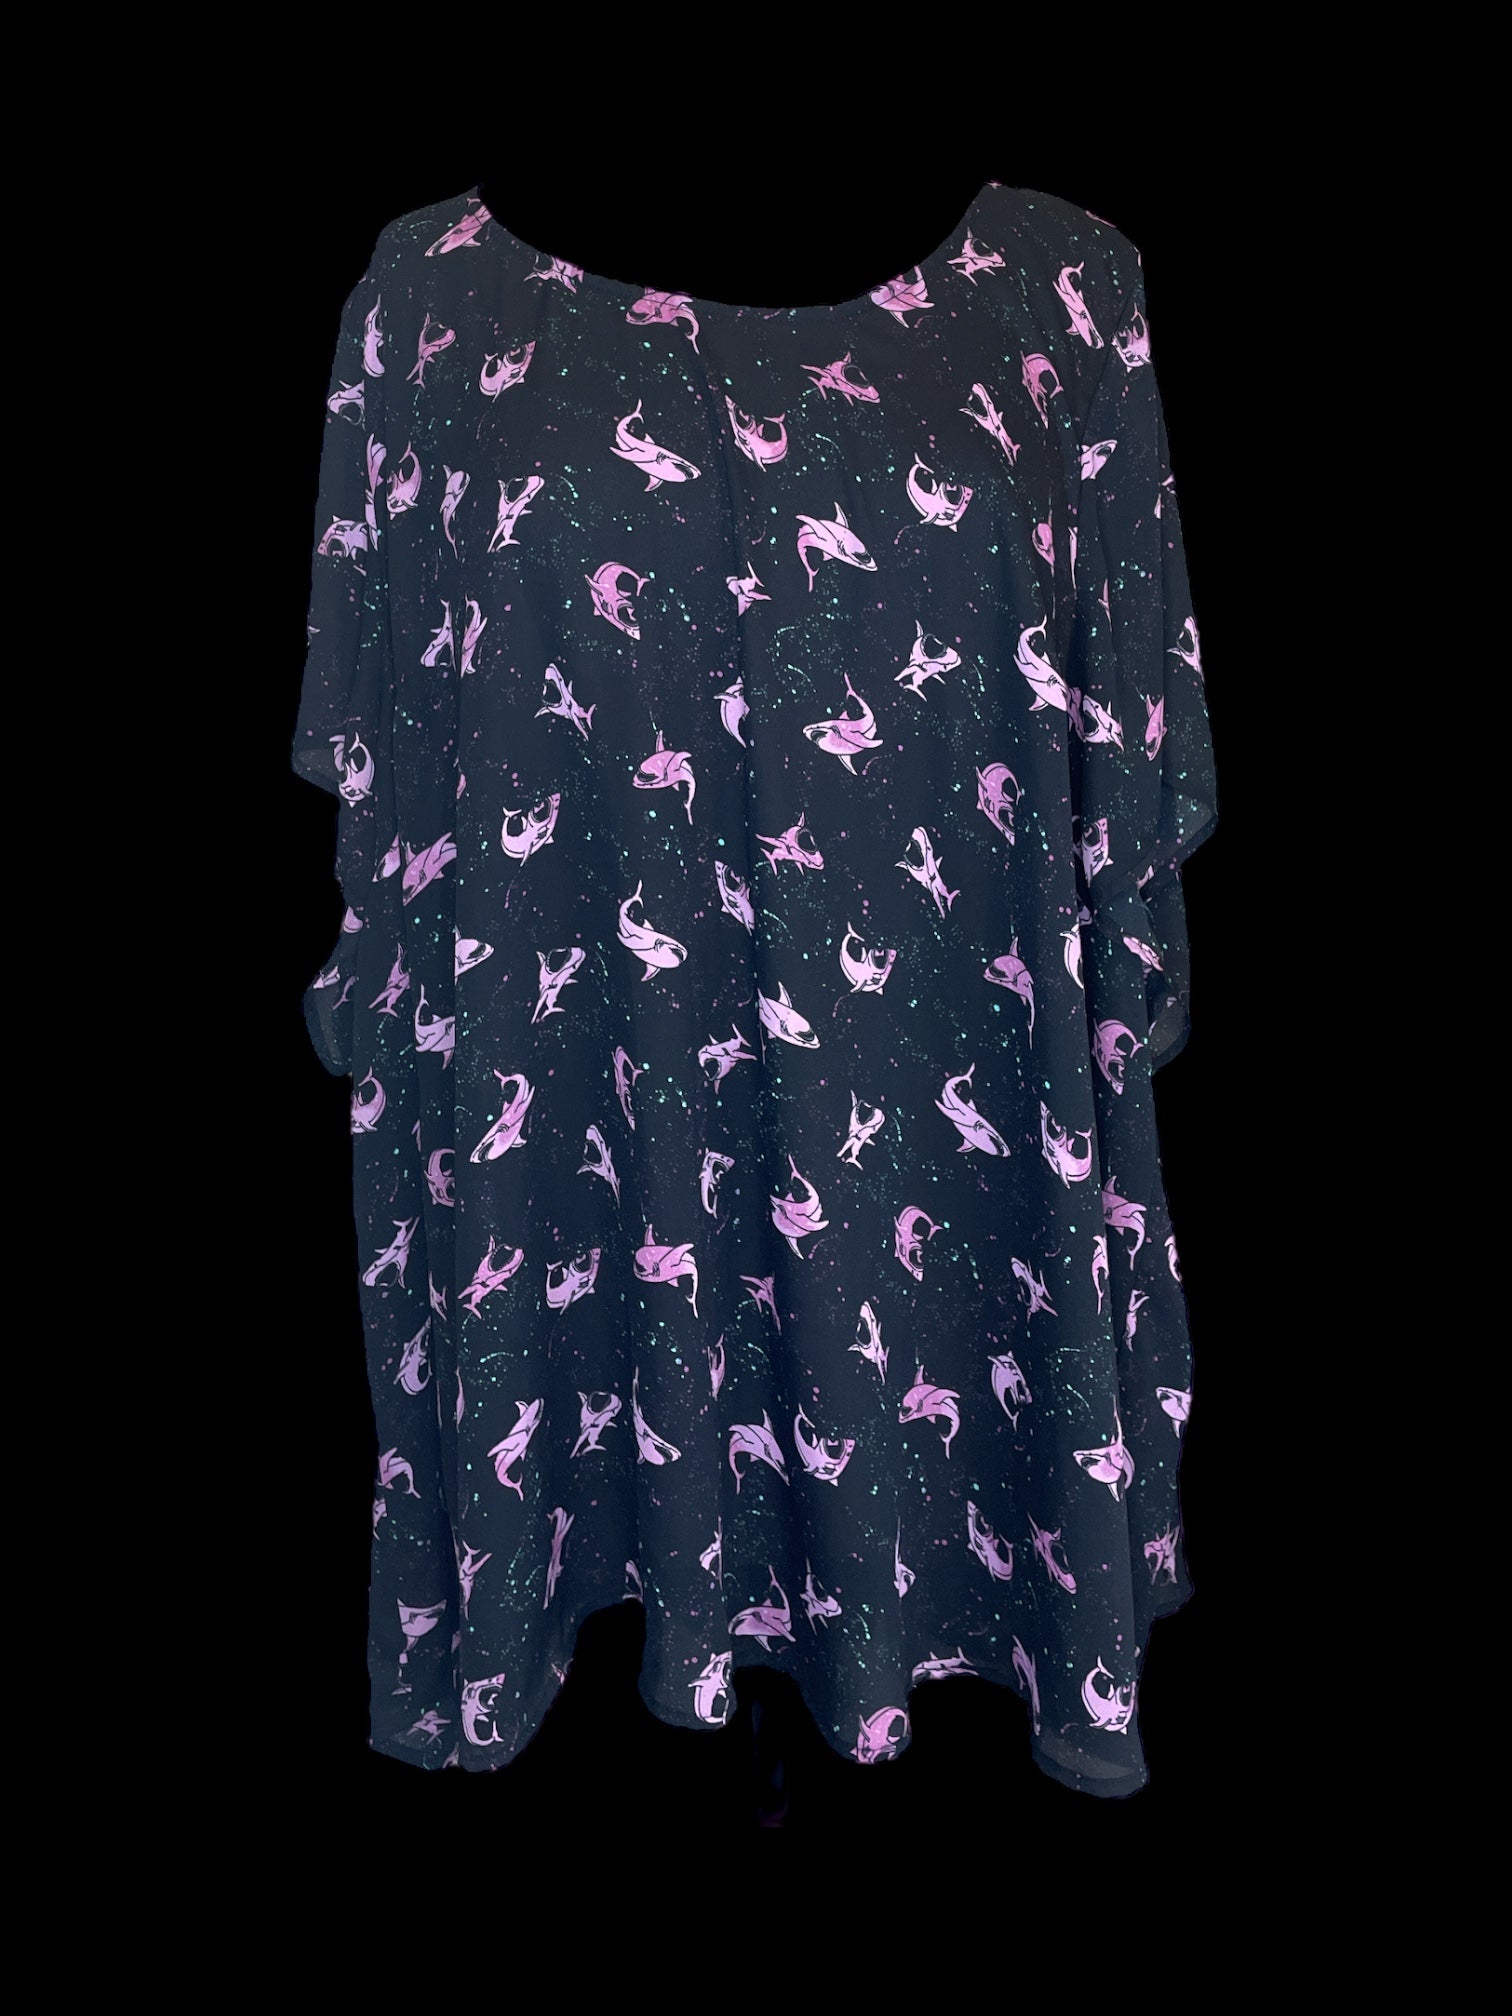 5X Black Sheer scoopneck short sleeve top w/ pink shark & paint